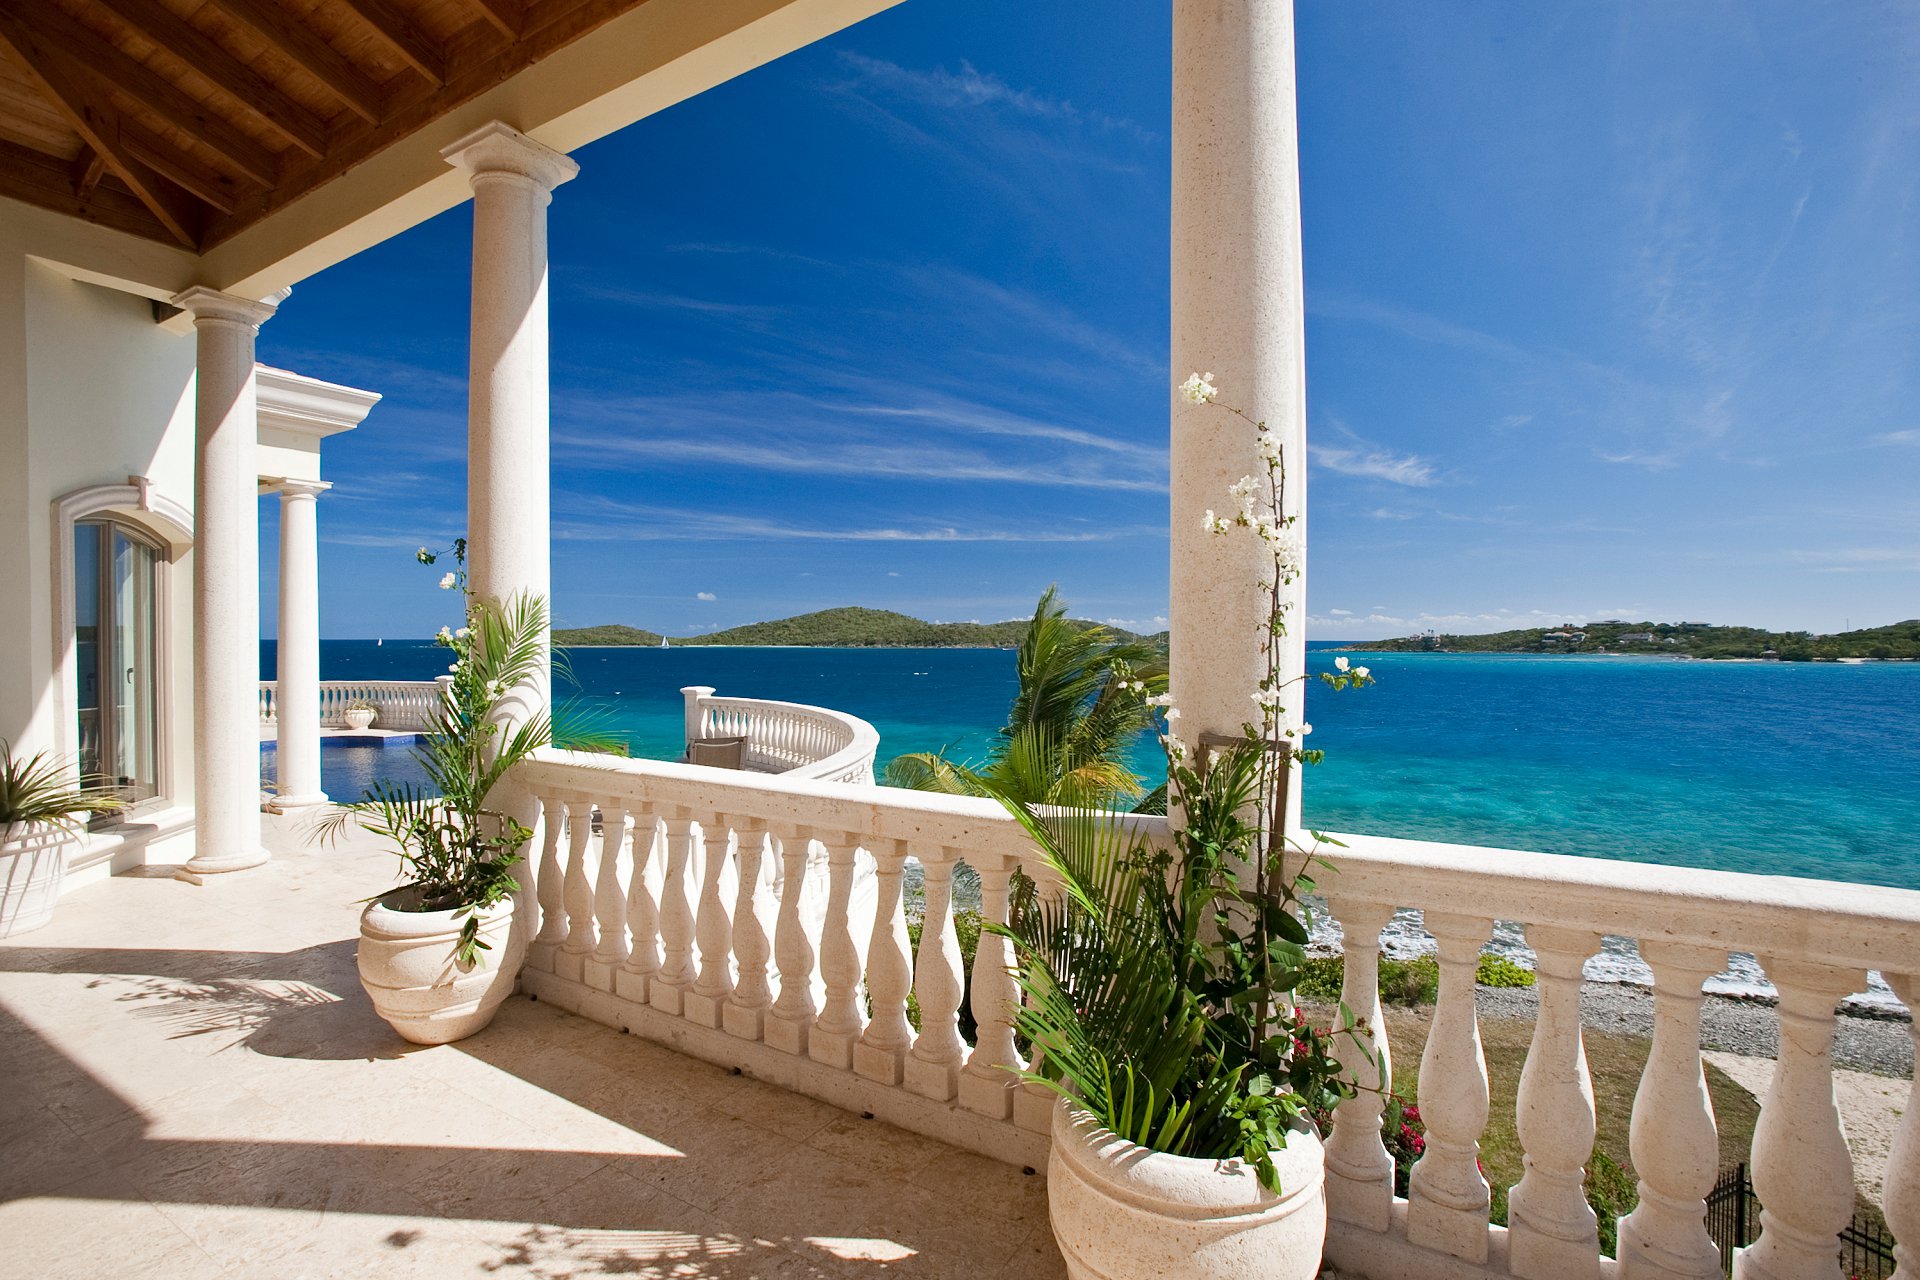 Balcony at Villa Serenita in St. Thomas